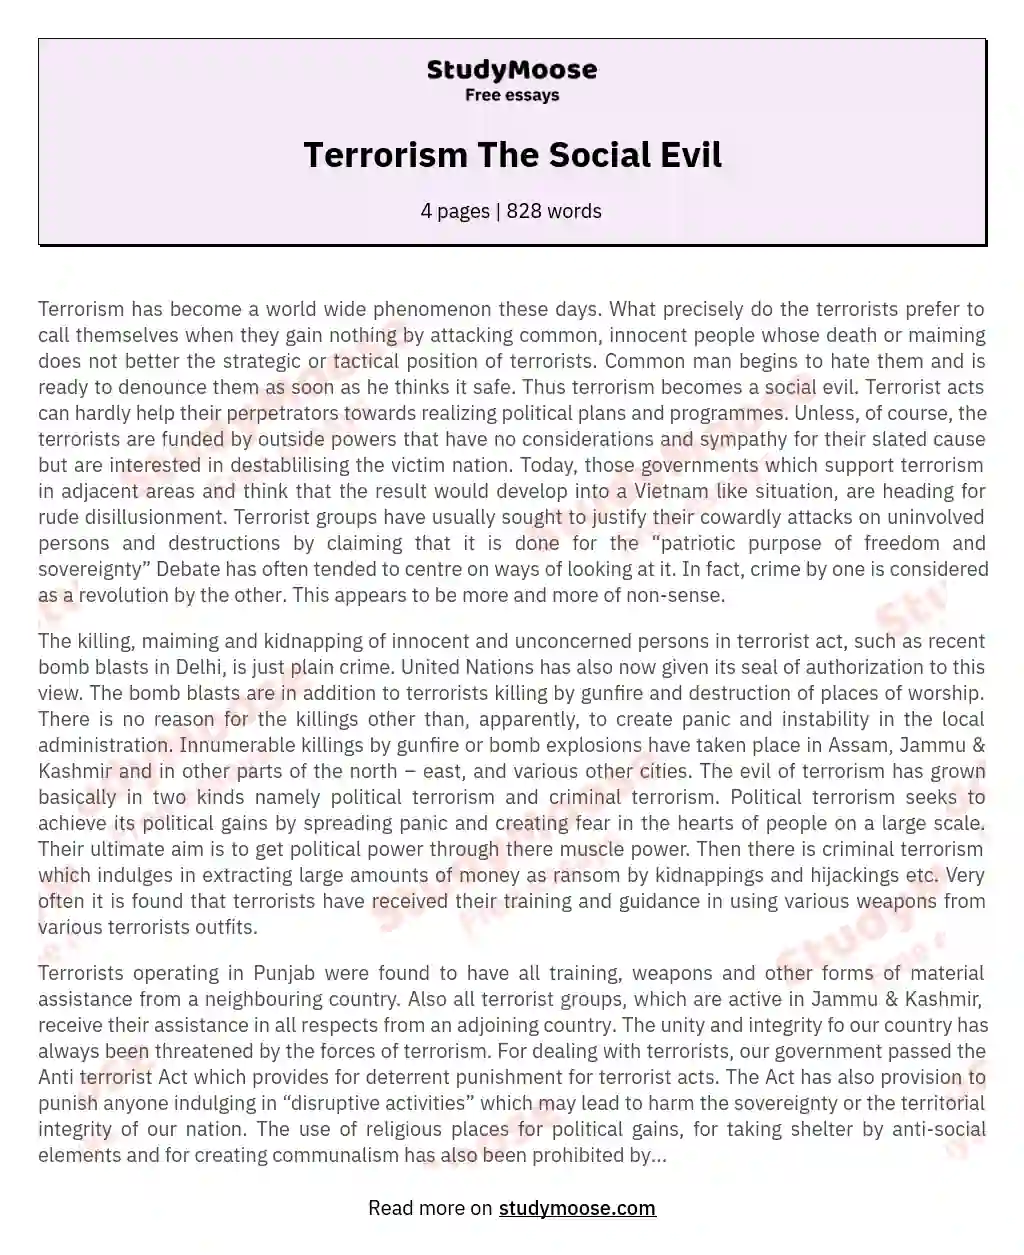 Terrorism The Social Evil